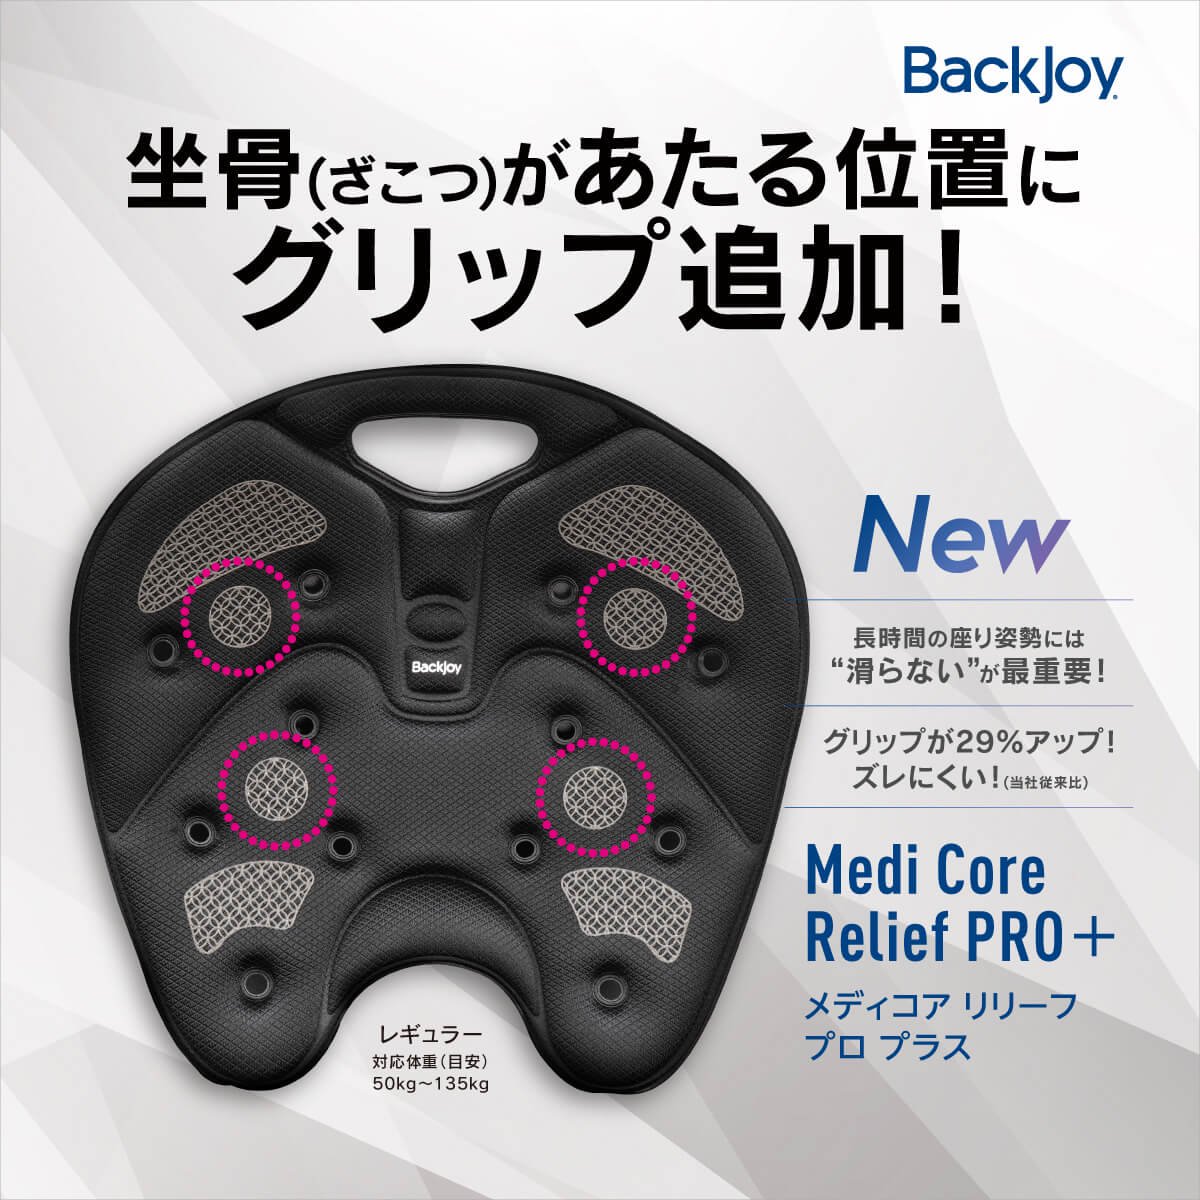 BackJoy Japan（BackJoy公式サイト）